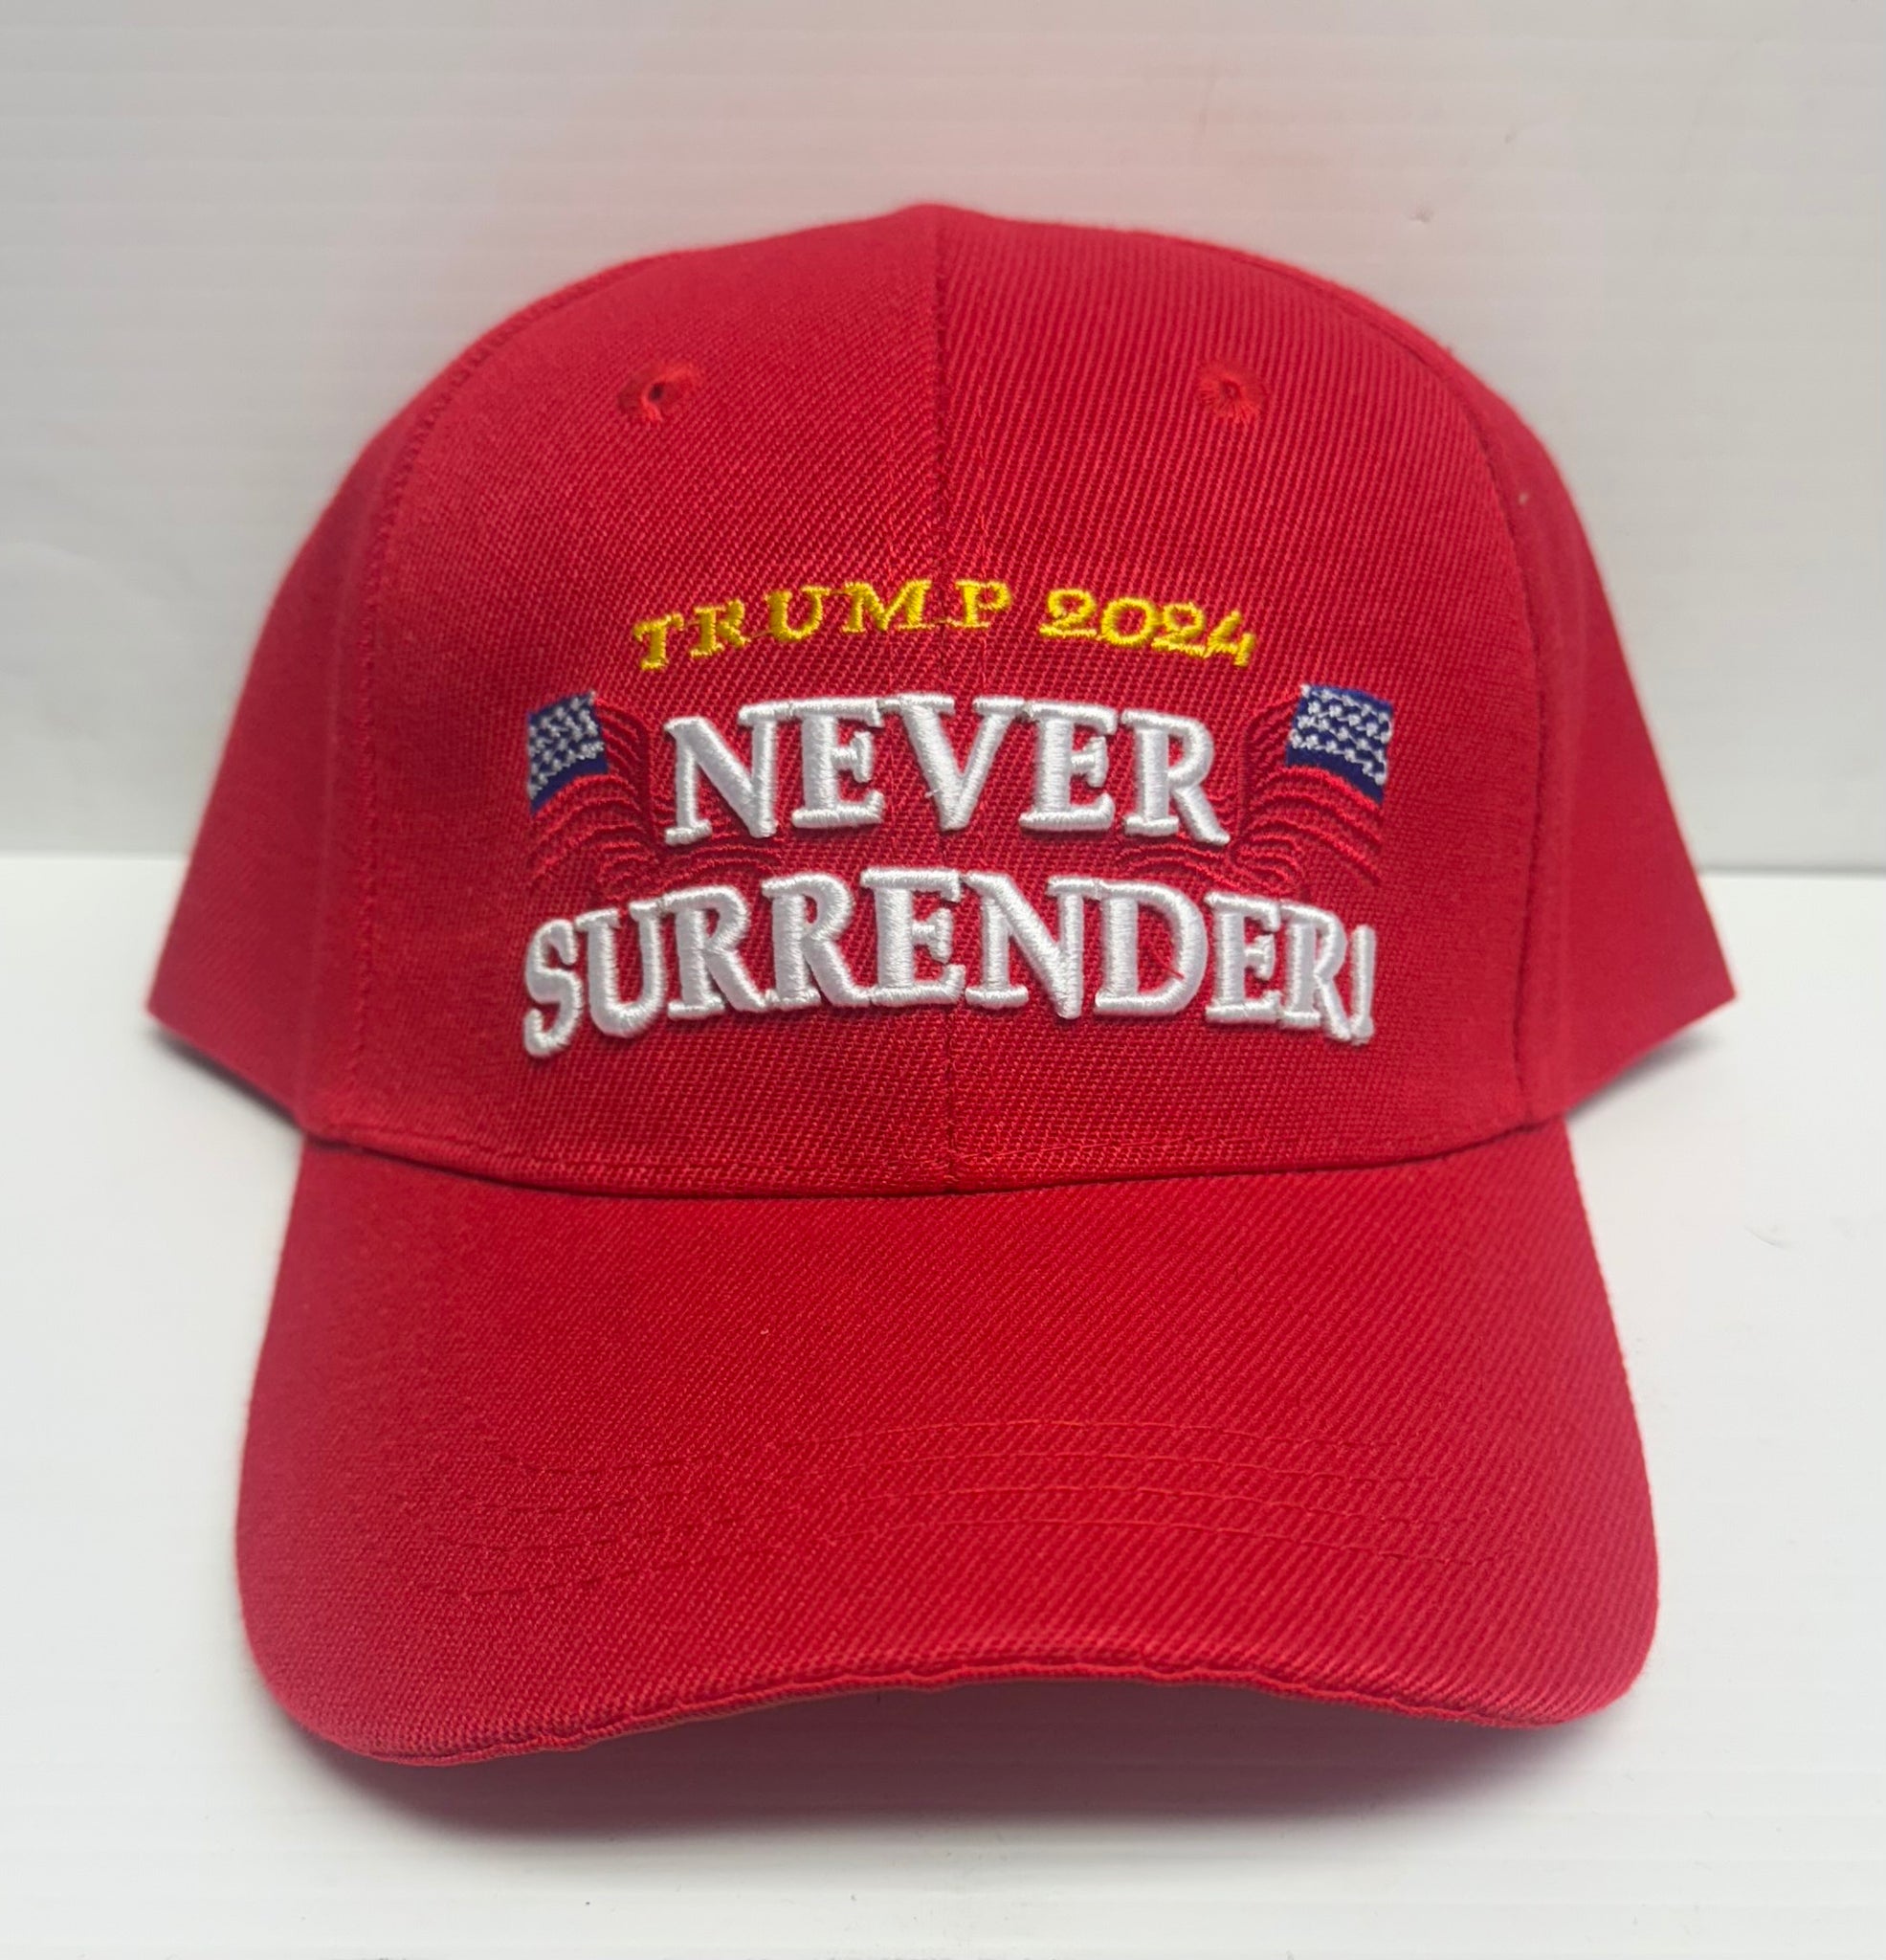 Trump 2024 "Never Surrender" baseball hat